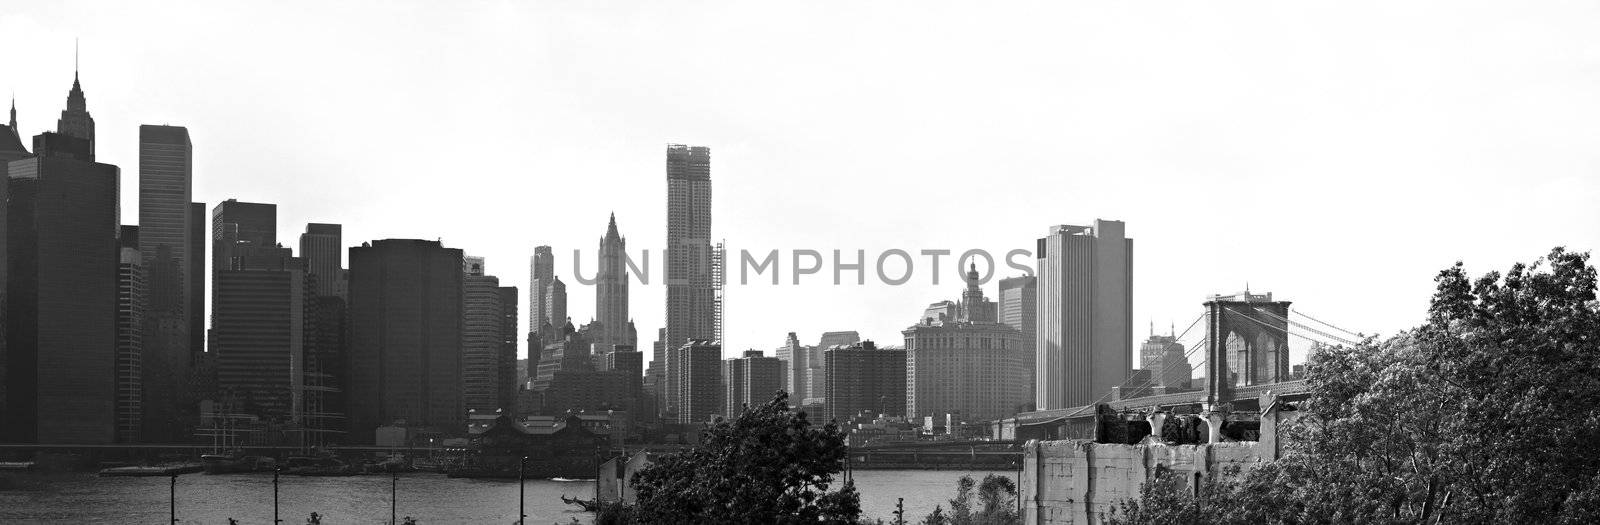 Manhattan NYC Skyline Panorama by graficallyminded